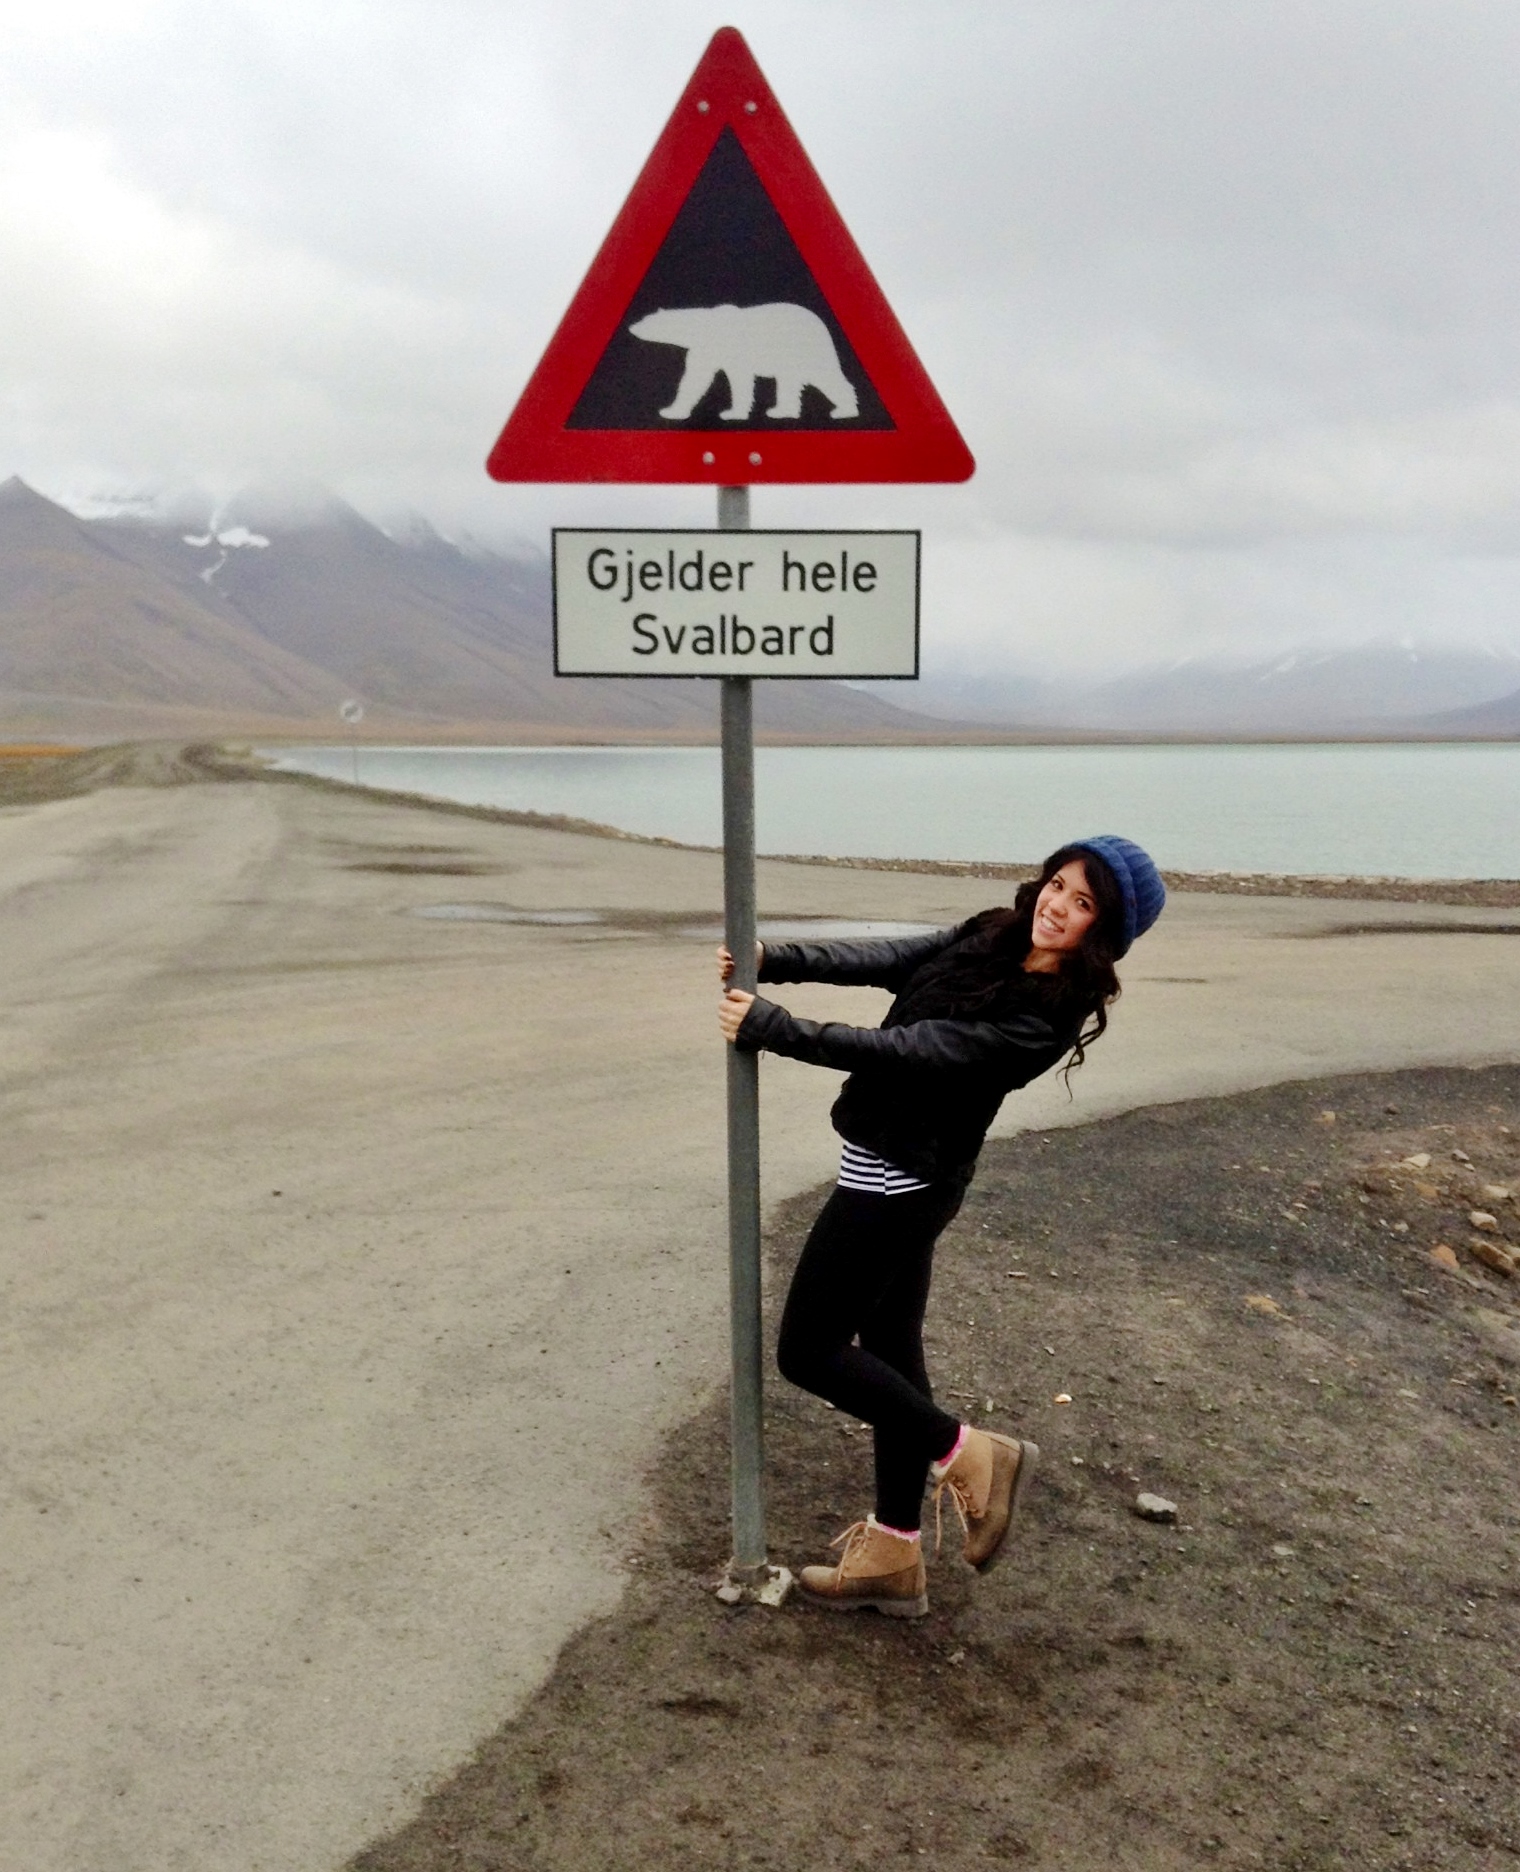 Polar bear warning sign, Svalbard